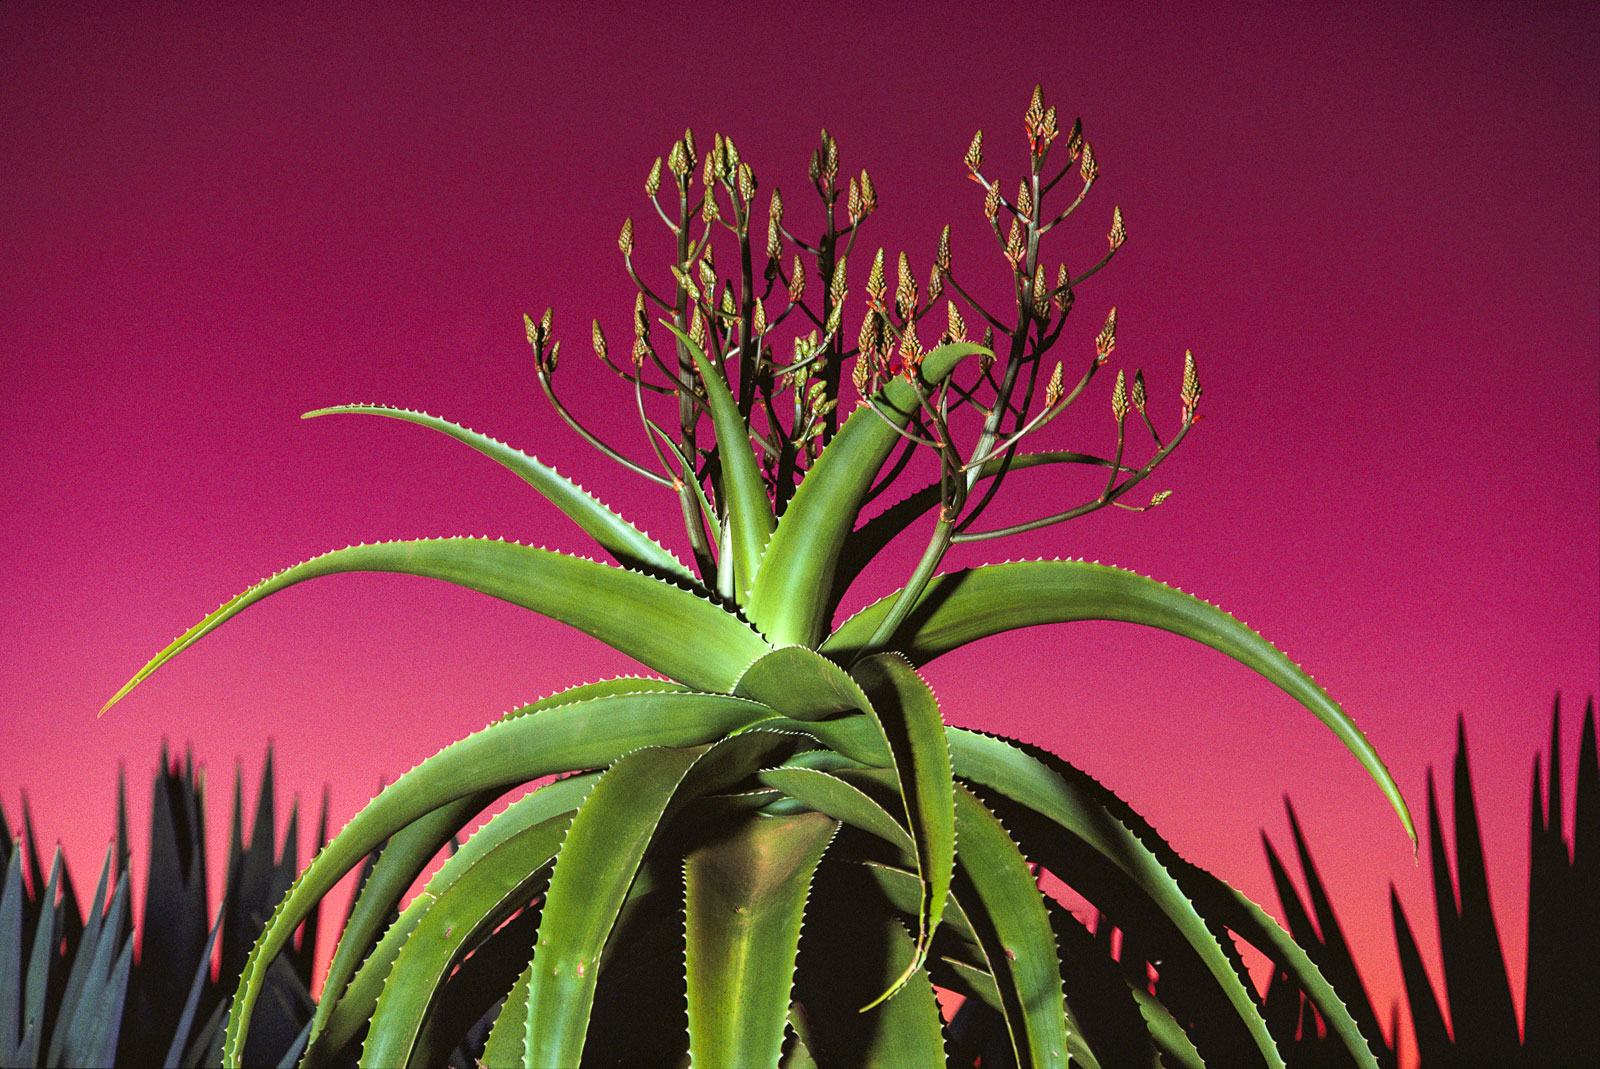 Aloe in bloom, Southern Madagascar